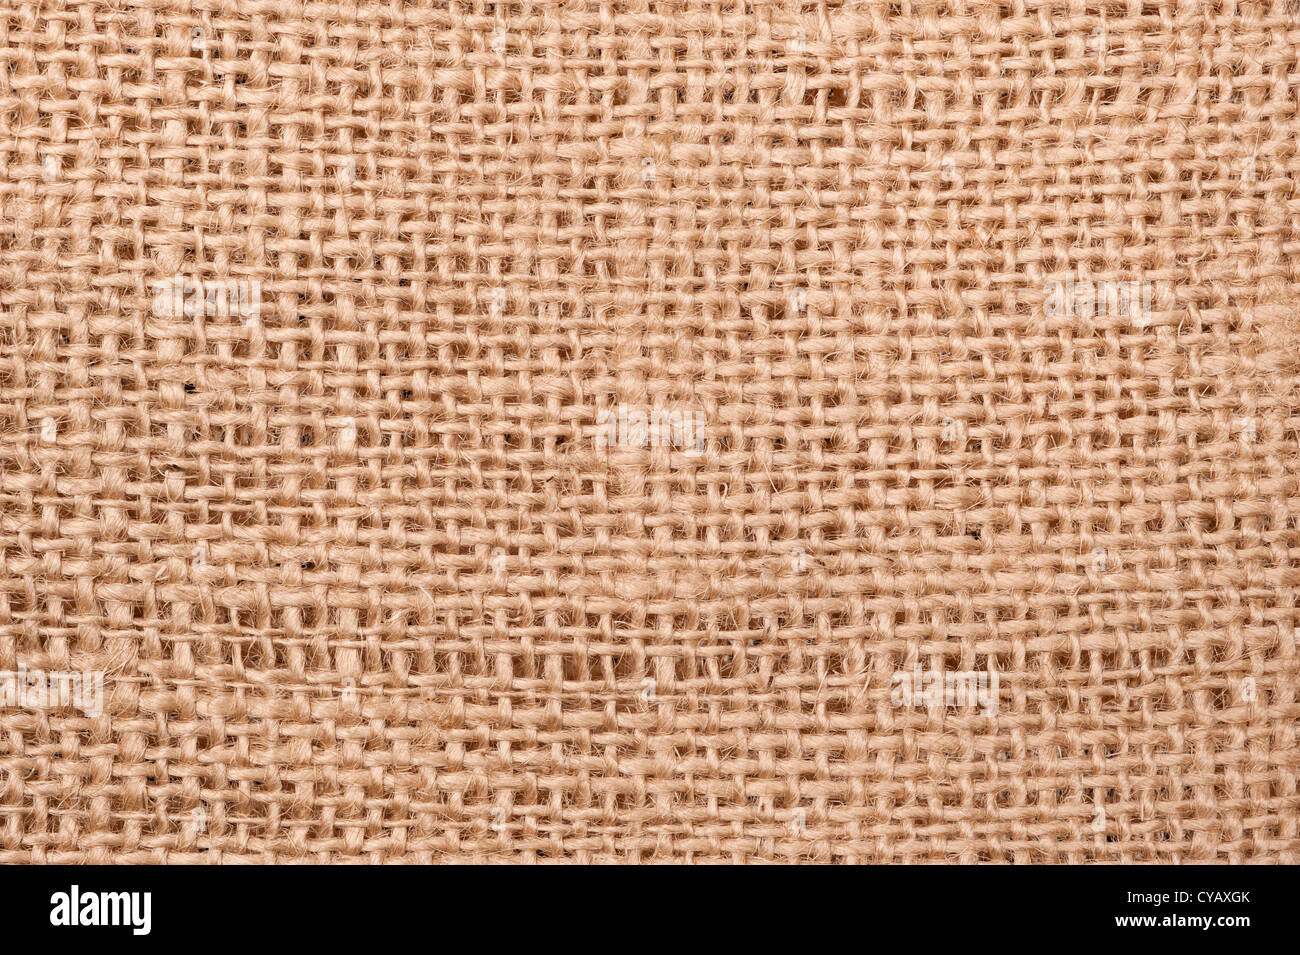 Close up di un beige sacco di tela che mostra i dettagli di fibre e tessuti pattern. Foto Stock